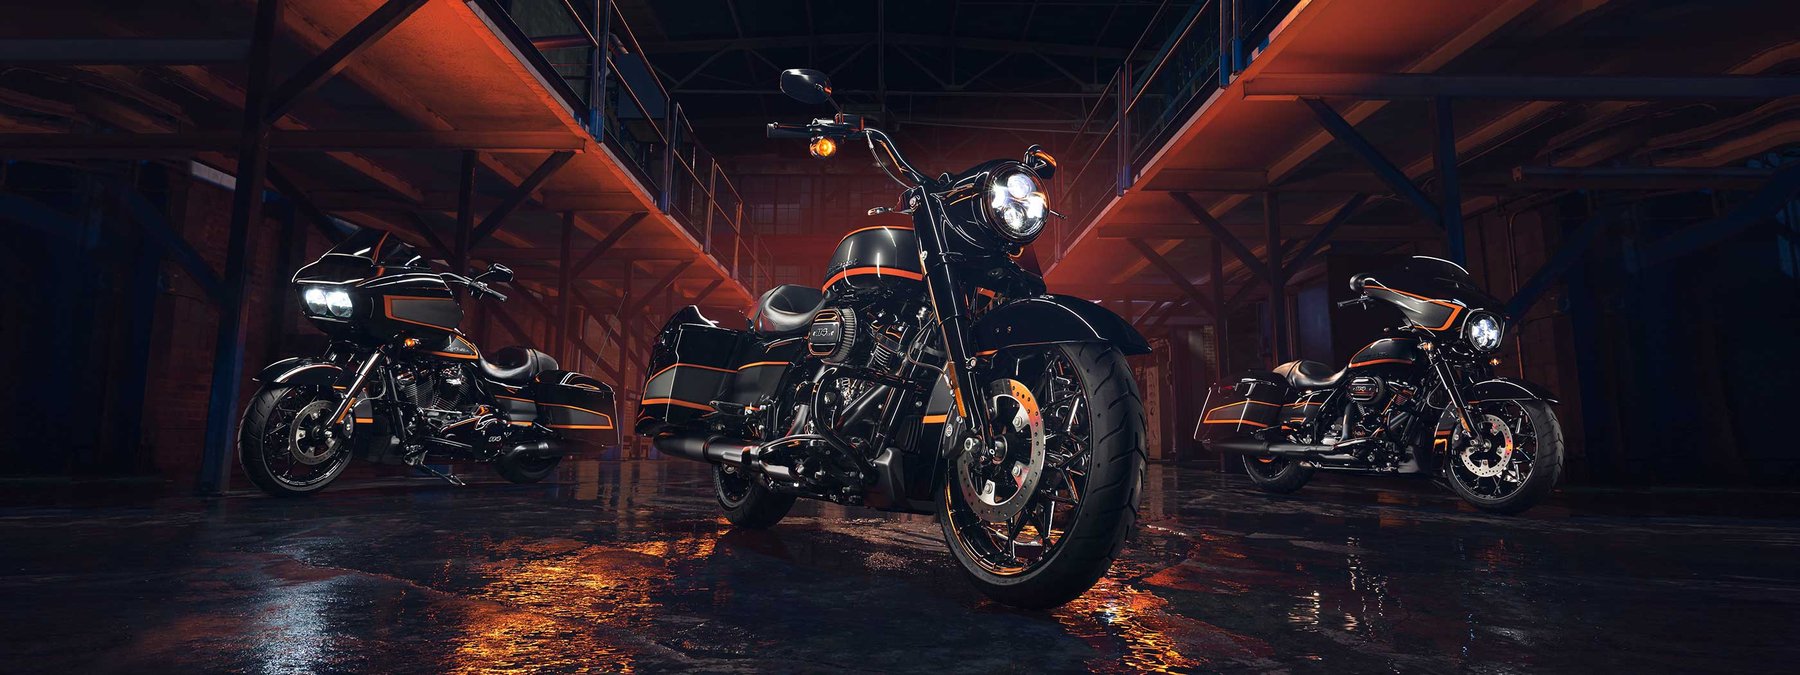 Customowy lakier Apex na motocyklach Harley-Davidson 